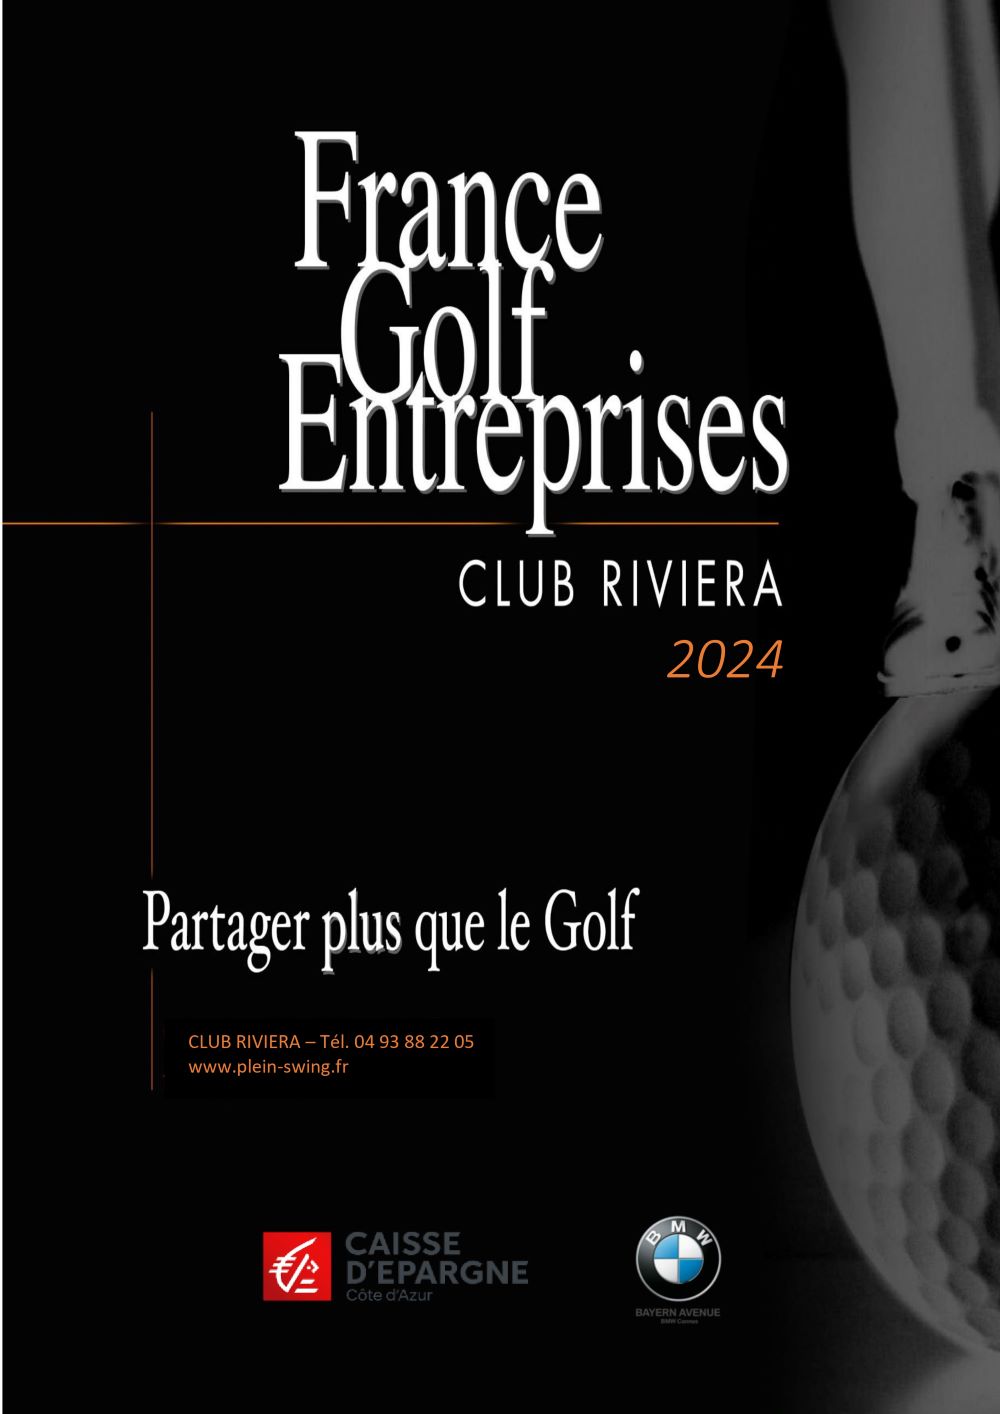 France Golf Entreprises (FGE)